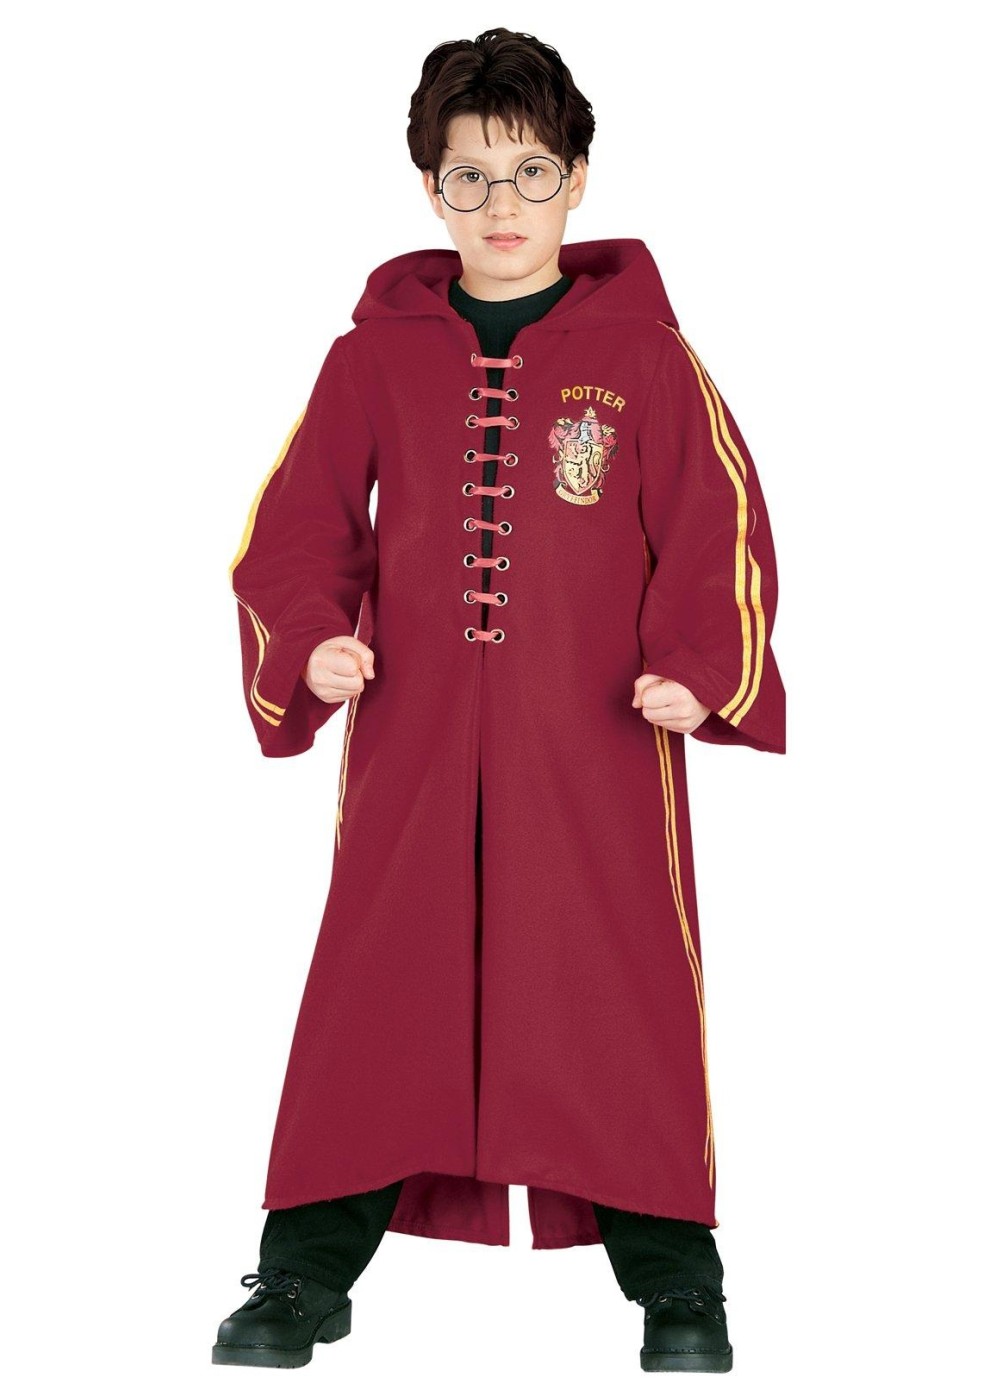  Quidditch Robe Child Costume